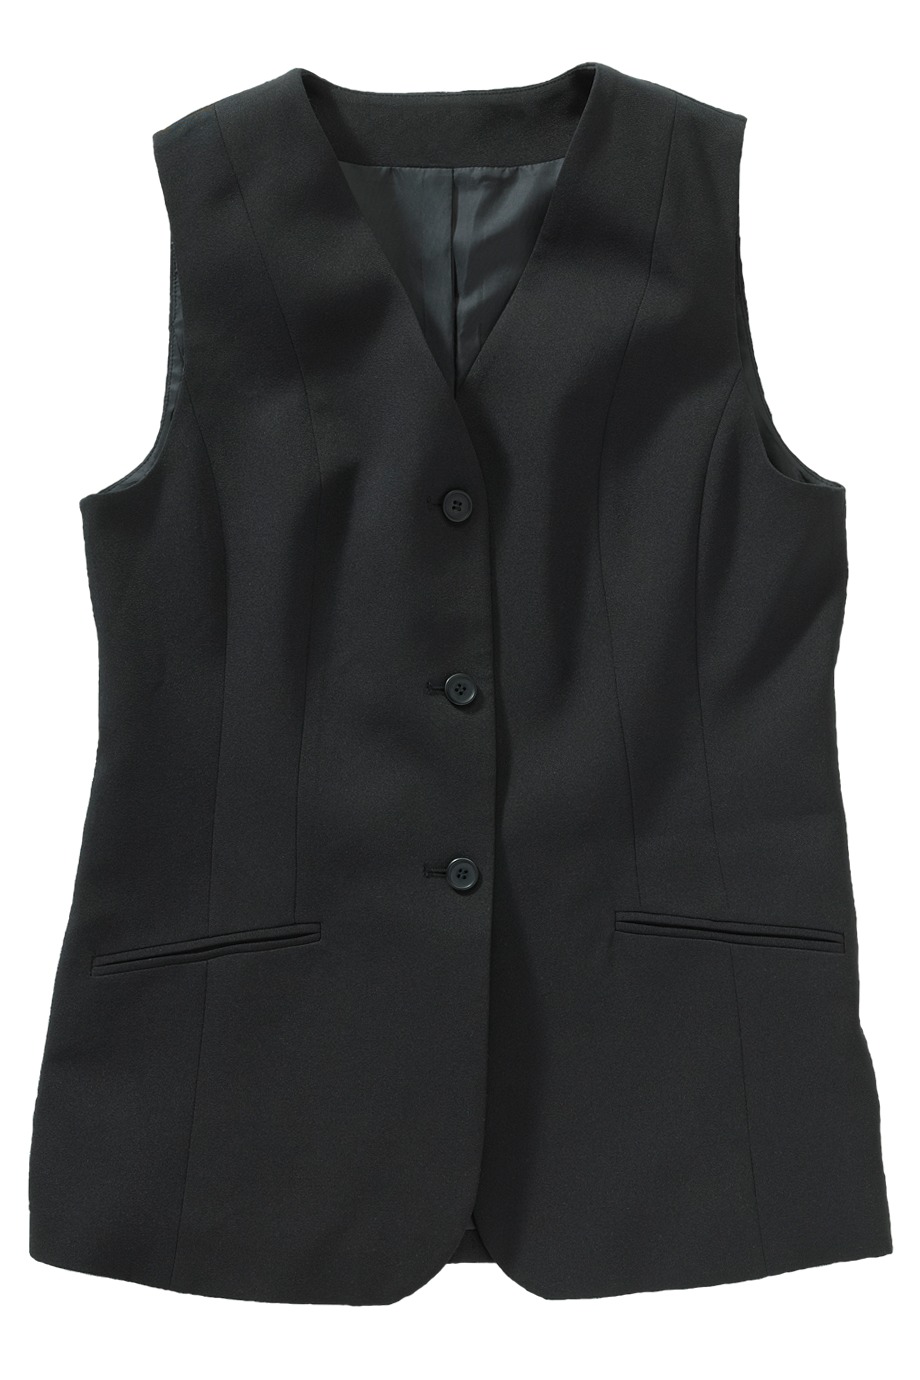 Edwards Garment 7551 - Women's Tunic Vest